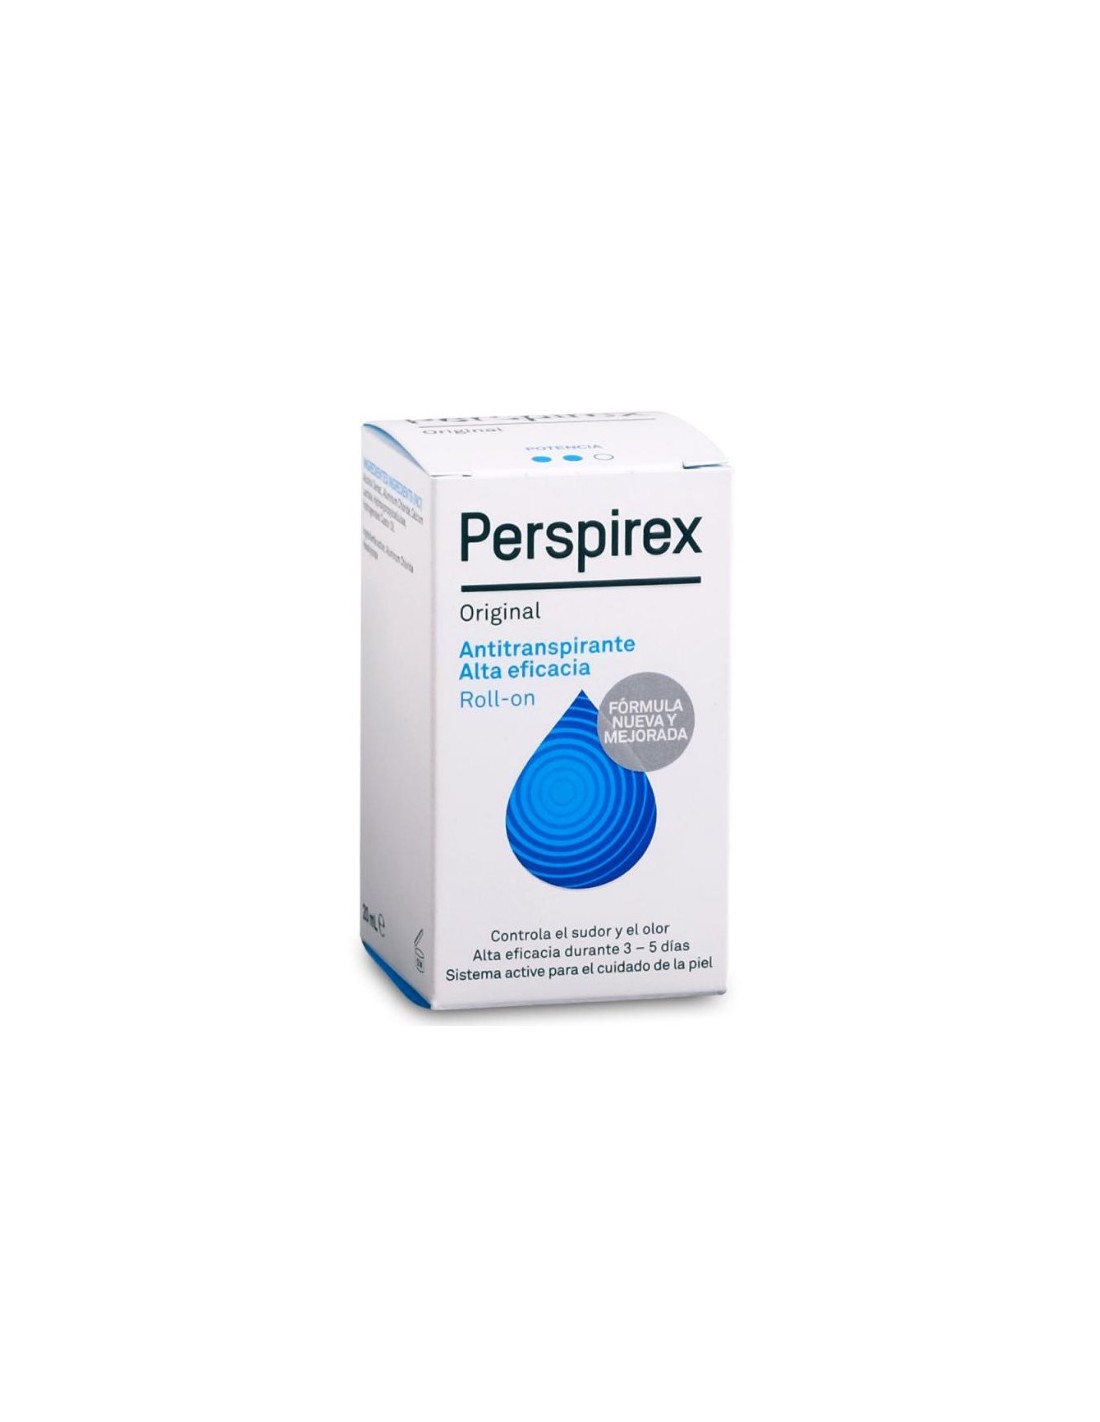 Perspirex Strong Desodorante Antitranspirante, 20 ml